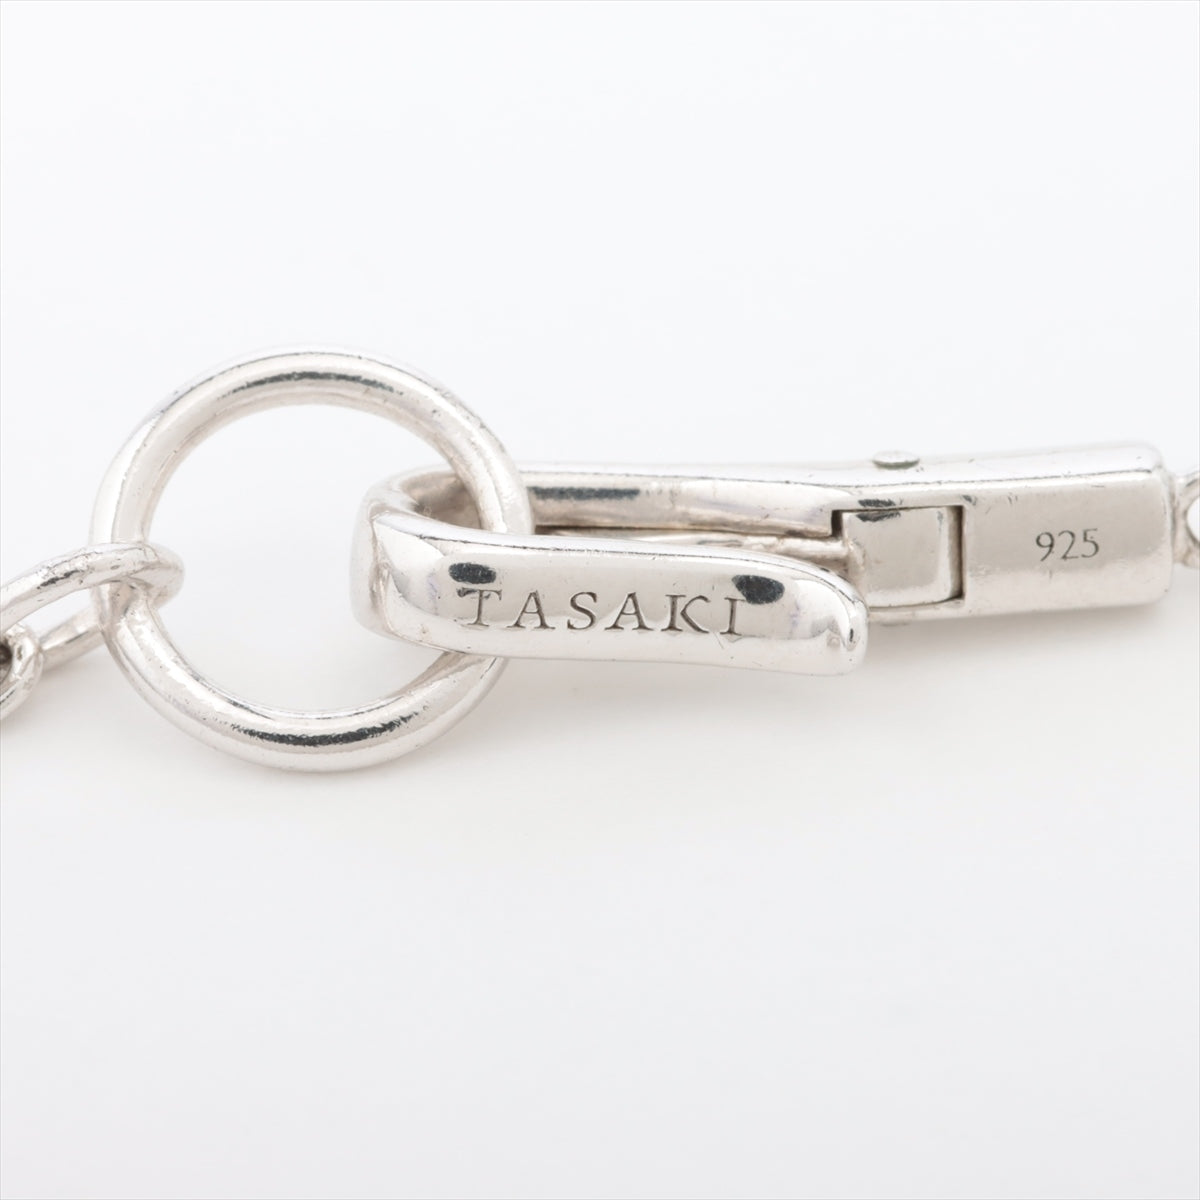 TASAKI Sapphire Necklace SV925 6.8g